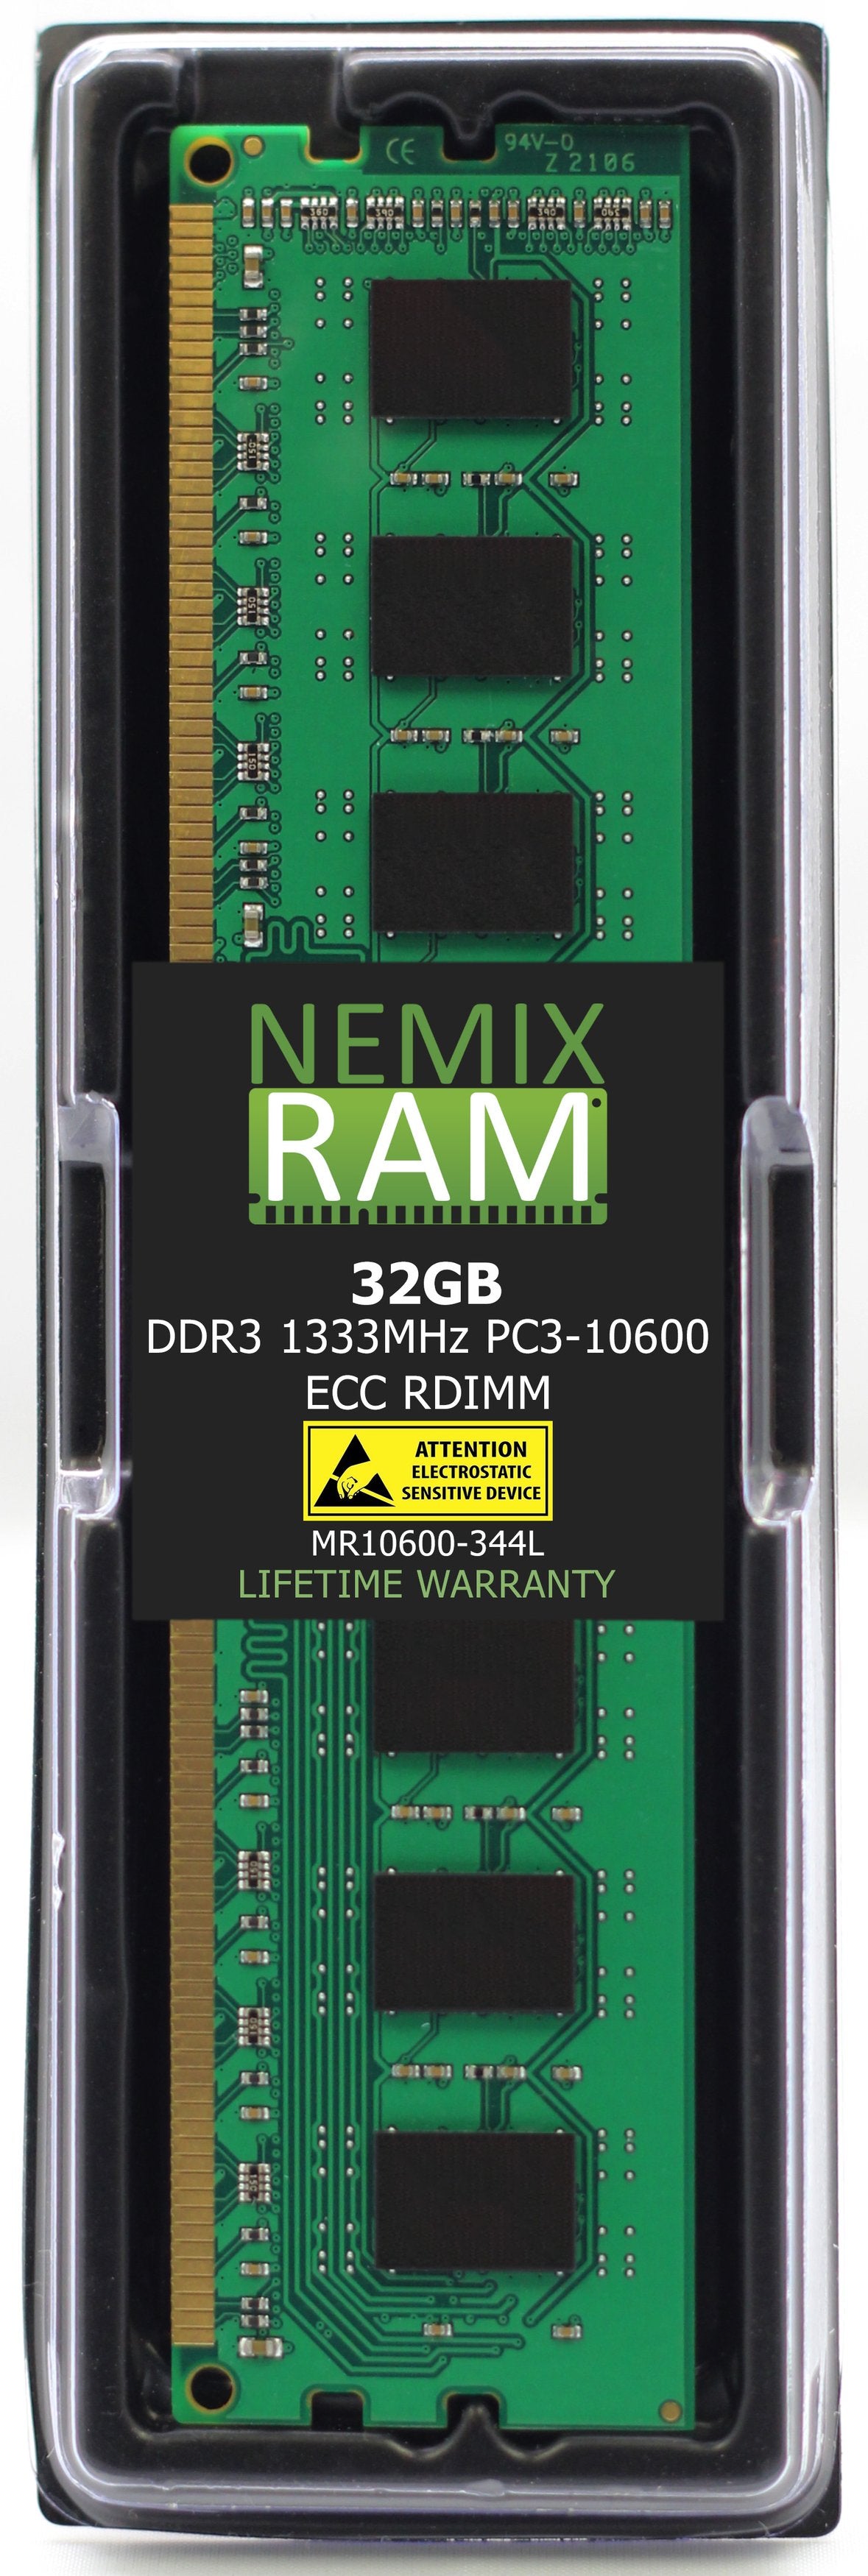 32GB DDR3 1333MHZ PC3-10600 RDIMM Compatible with Supermicro MEM-DR332L-HL01-ER13